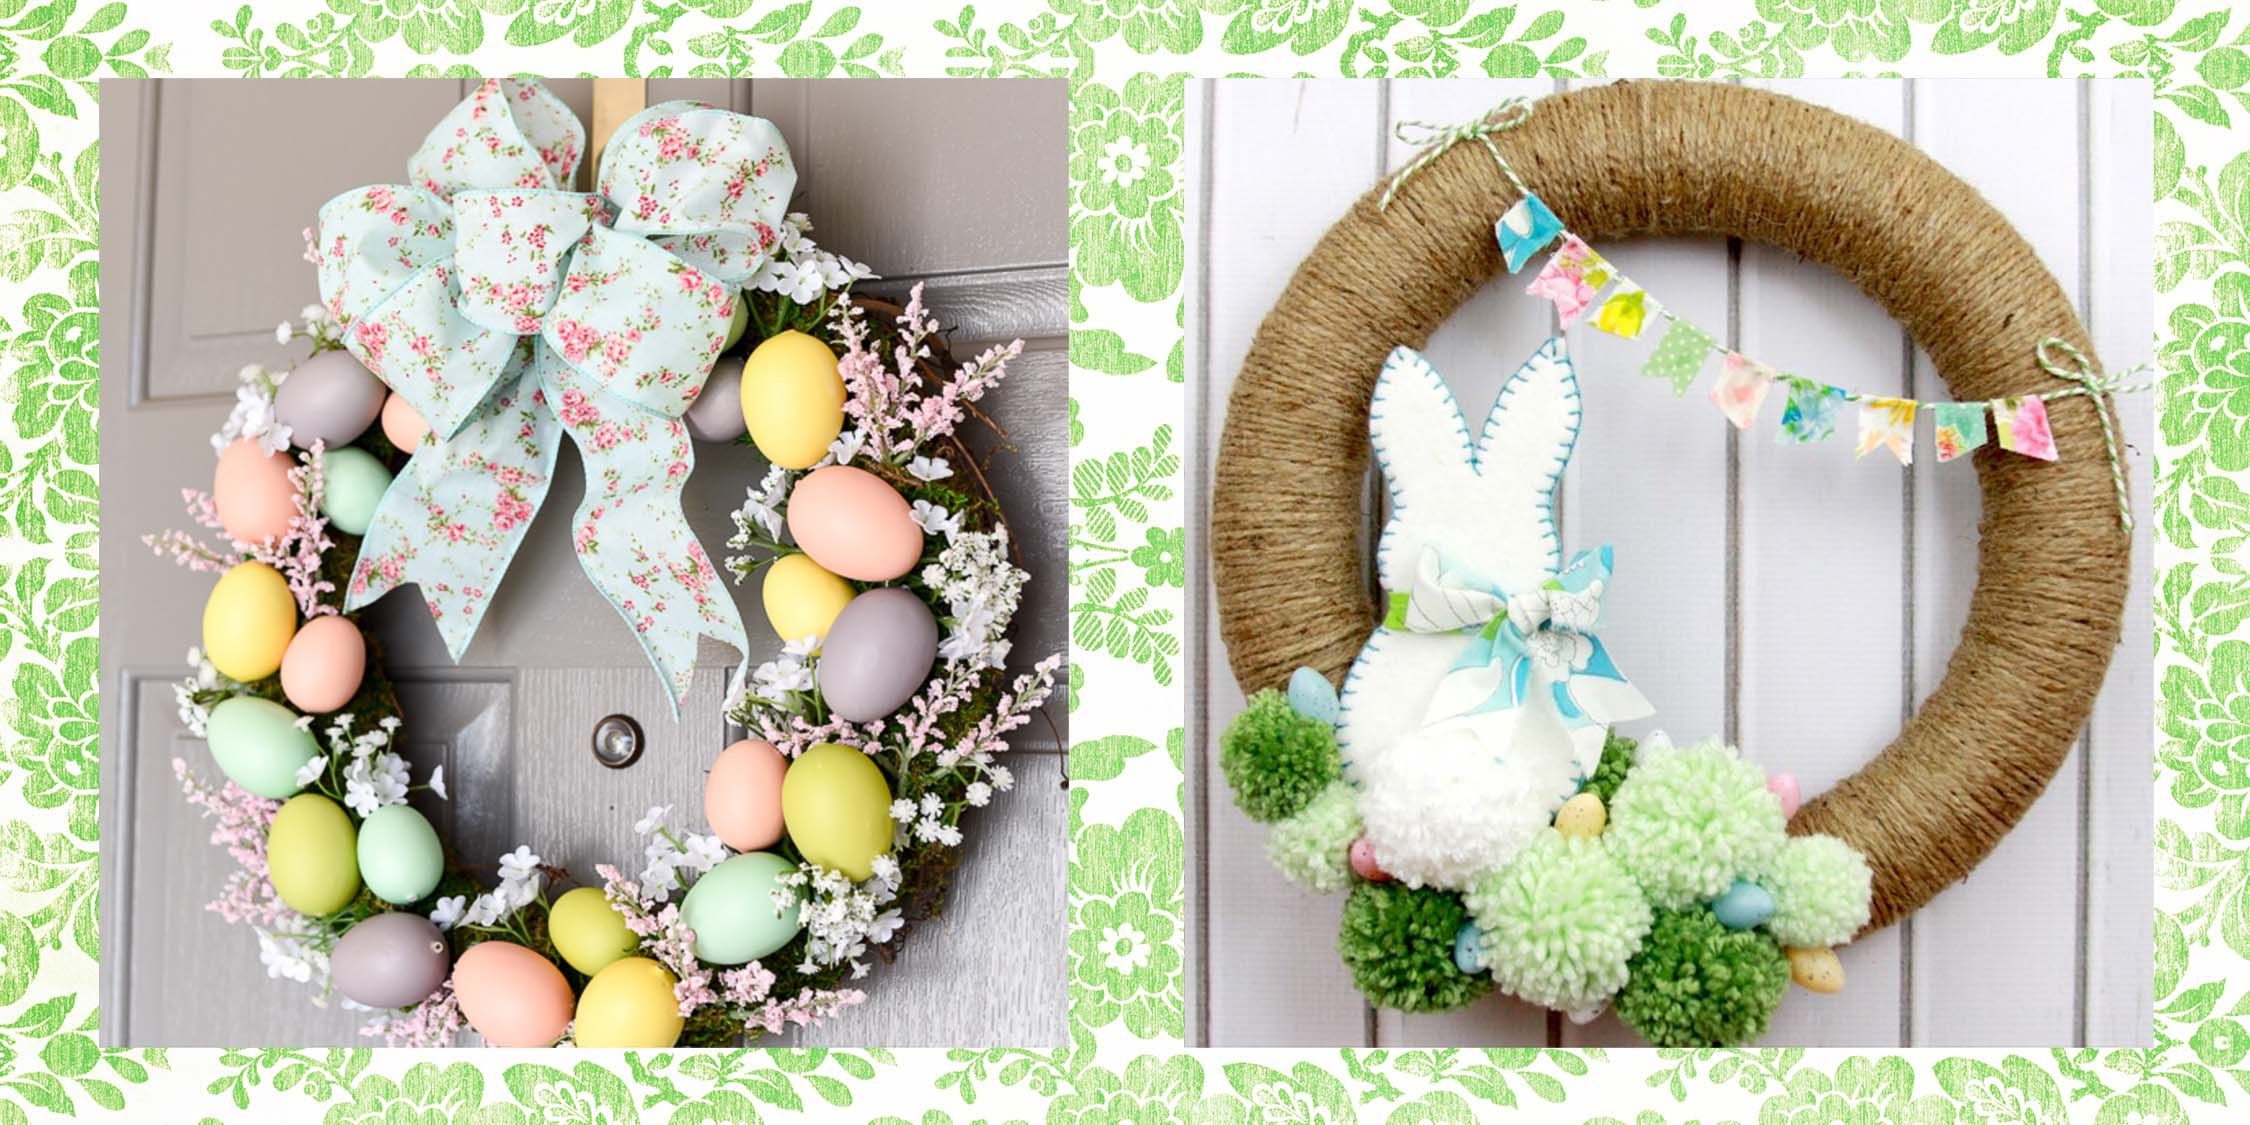 50 Diy Easter Wreath Ideas - How To Make An Easter Wreath